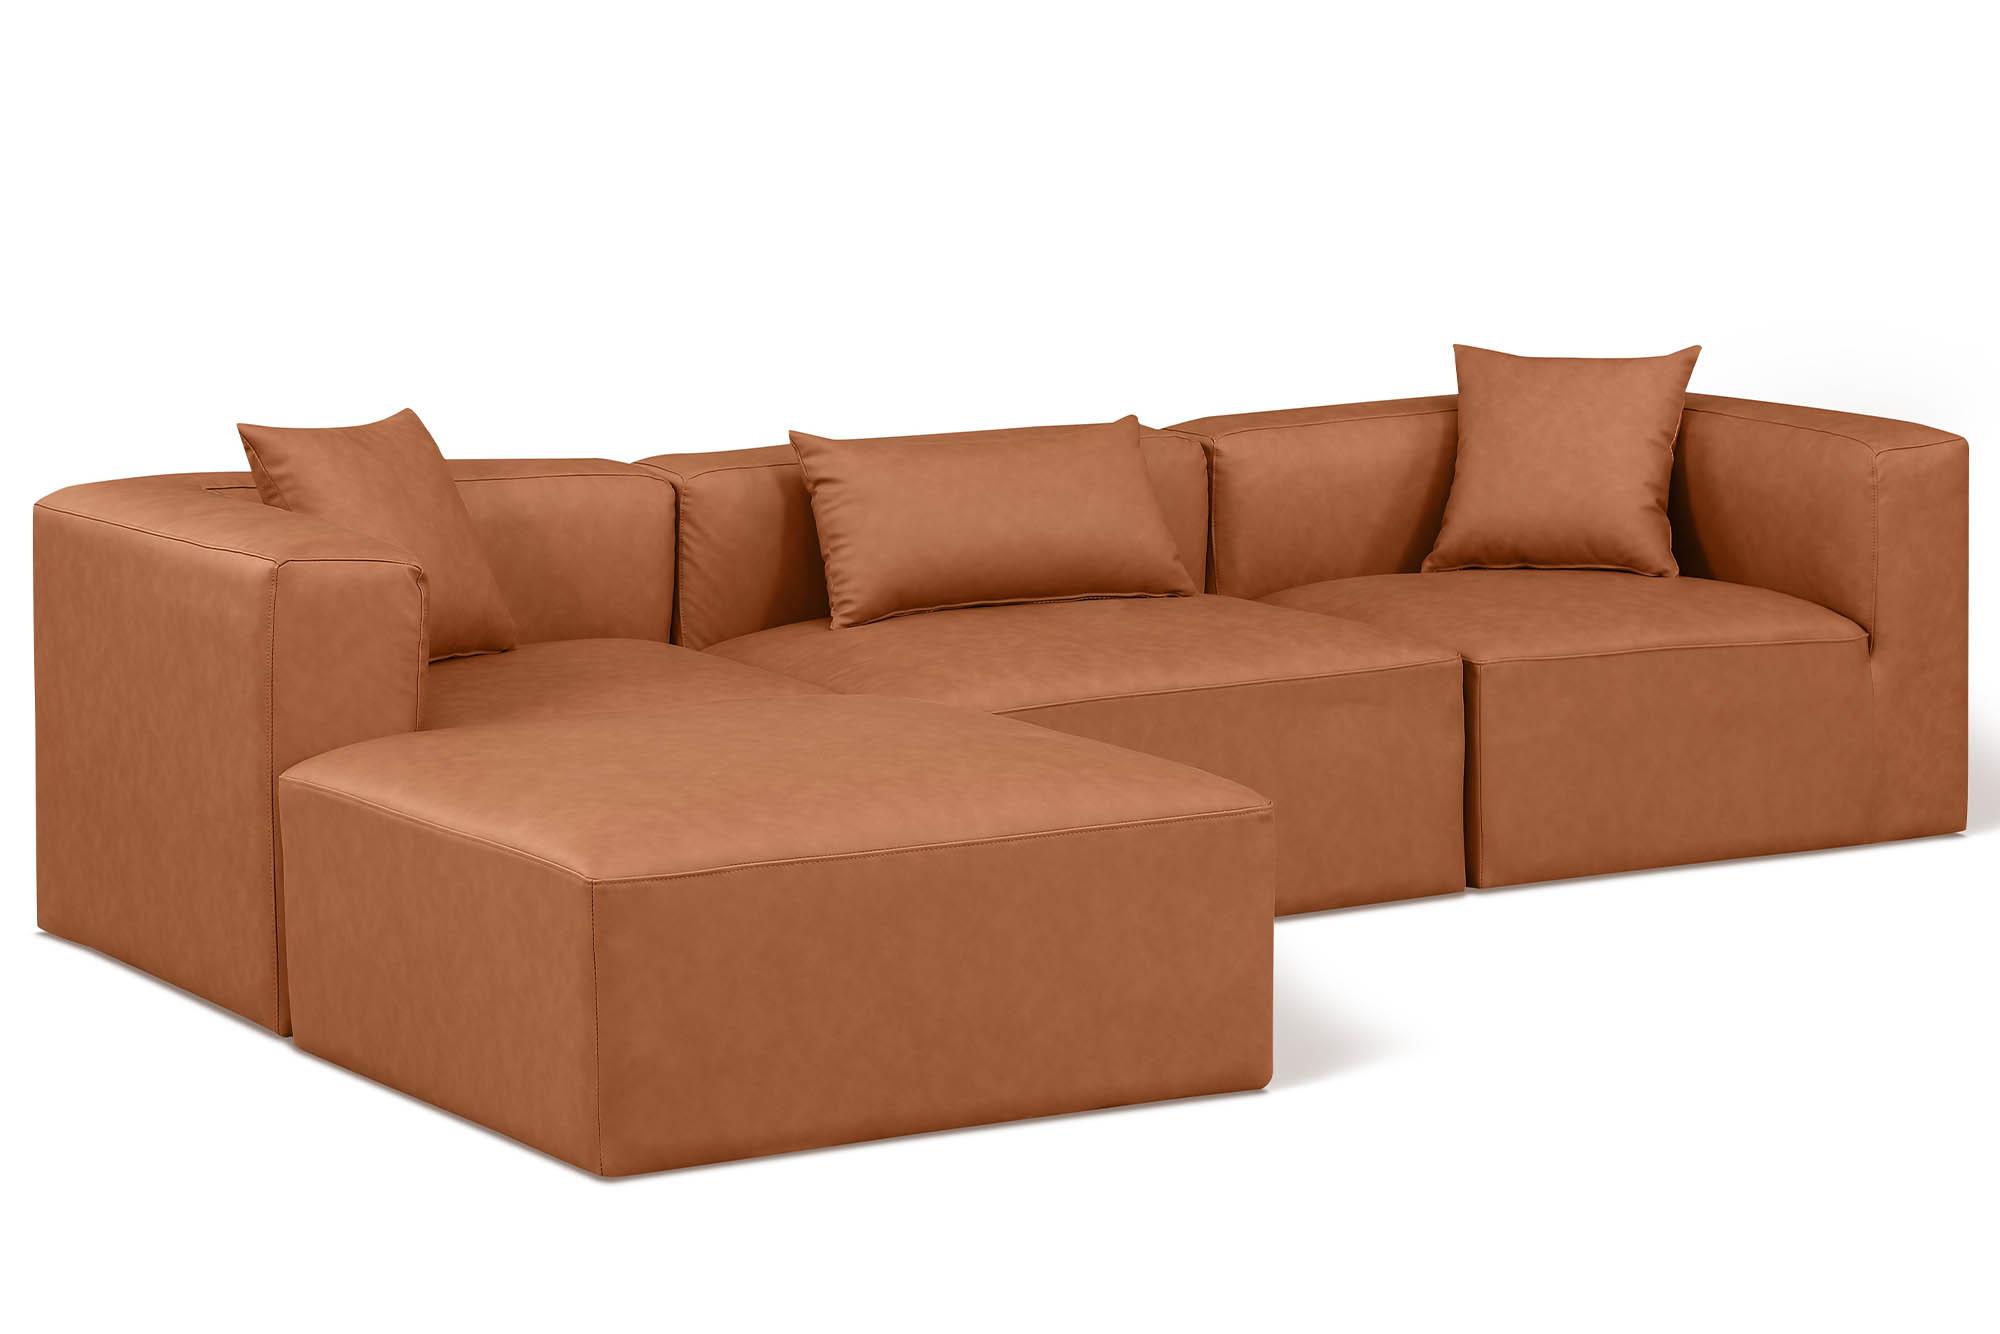 Contemporary, Modern Modular Sectional Sofa CUBE 668Cognac-Sec4A 668Cognac-Sec4A in Cognac Faux Leather